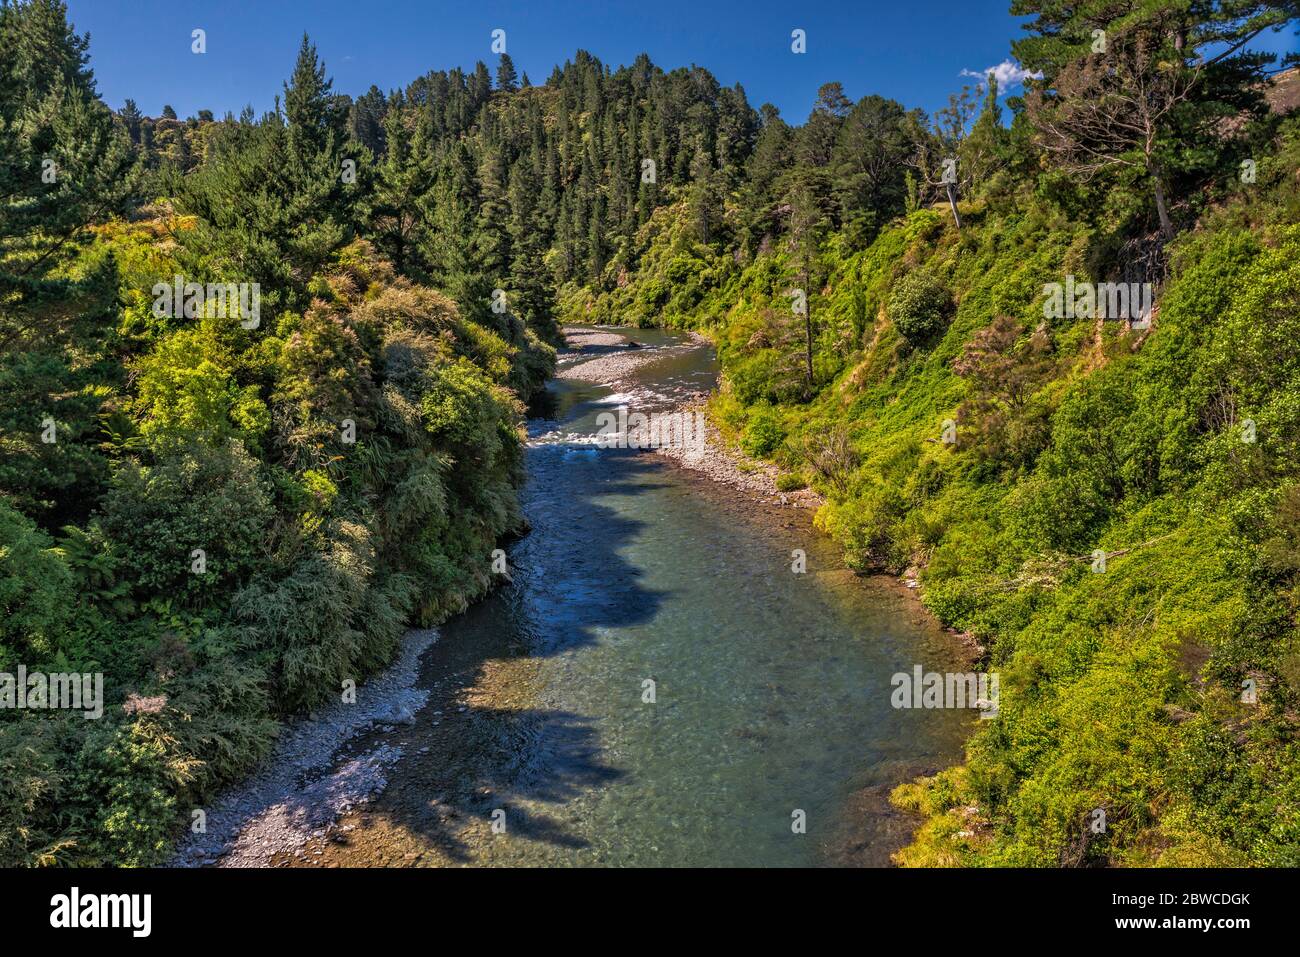 Ngaruroro River, Kaweka Range mountains, Kaweka Forest Park, from Taihape Road near Kuripapango Campsite, Hawke's Bay Region, North Island New Zealand Stock Photo